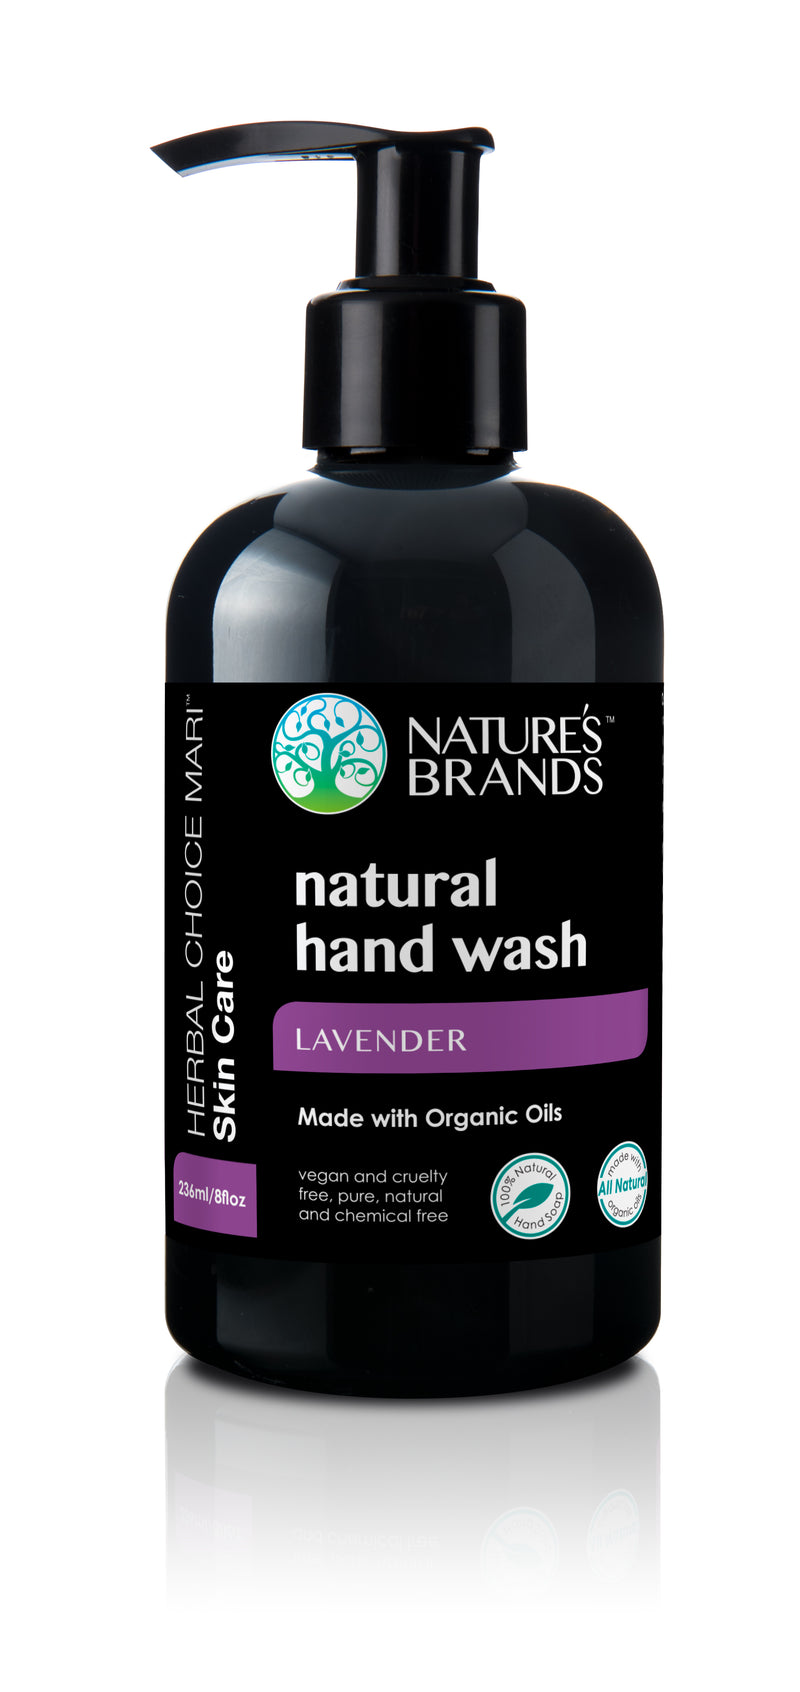 Herbal Choice Mari Hand Soap(Wash) - Herbal Choice Mari Hand Soap(Wash) - Herbal Choice Mari Hand Soap(Wash)